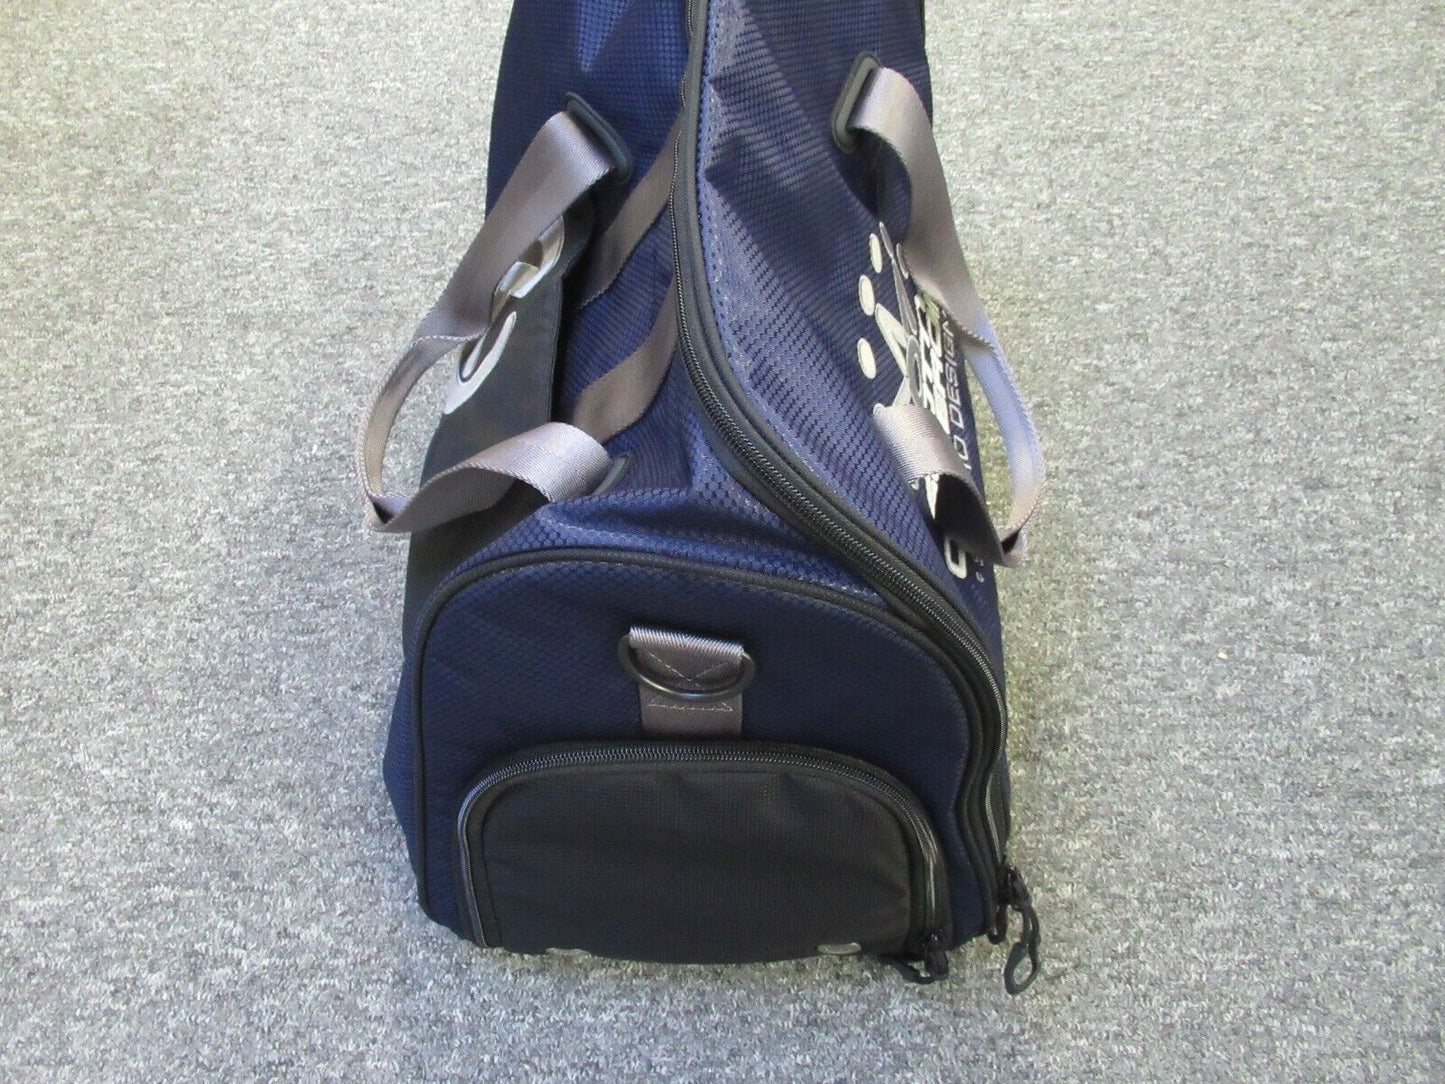 scotty cameron weekender travel bag navy black grey